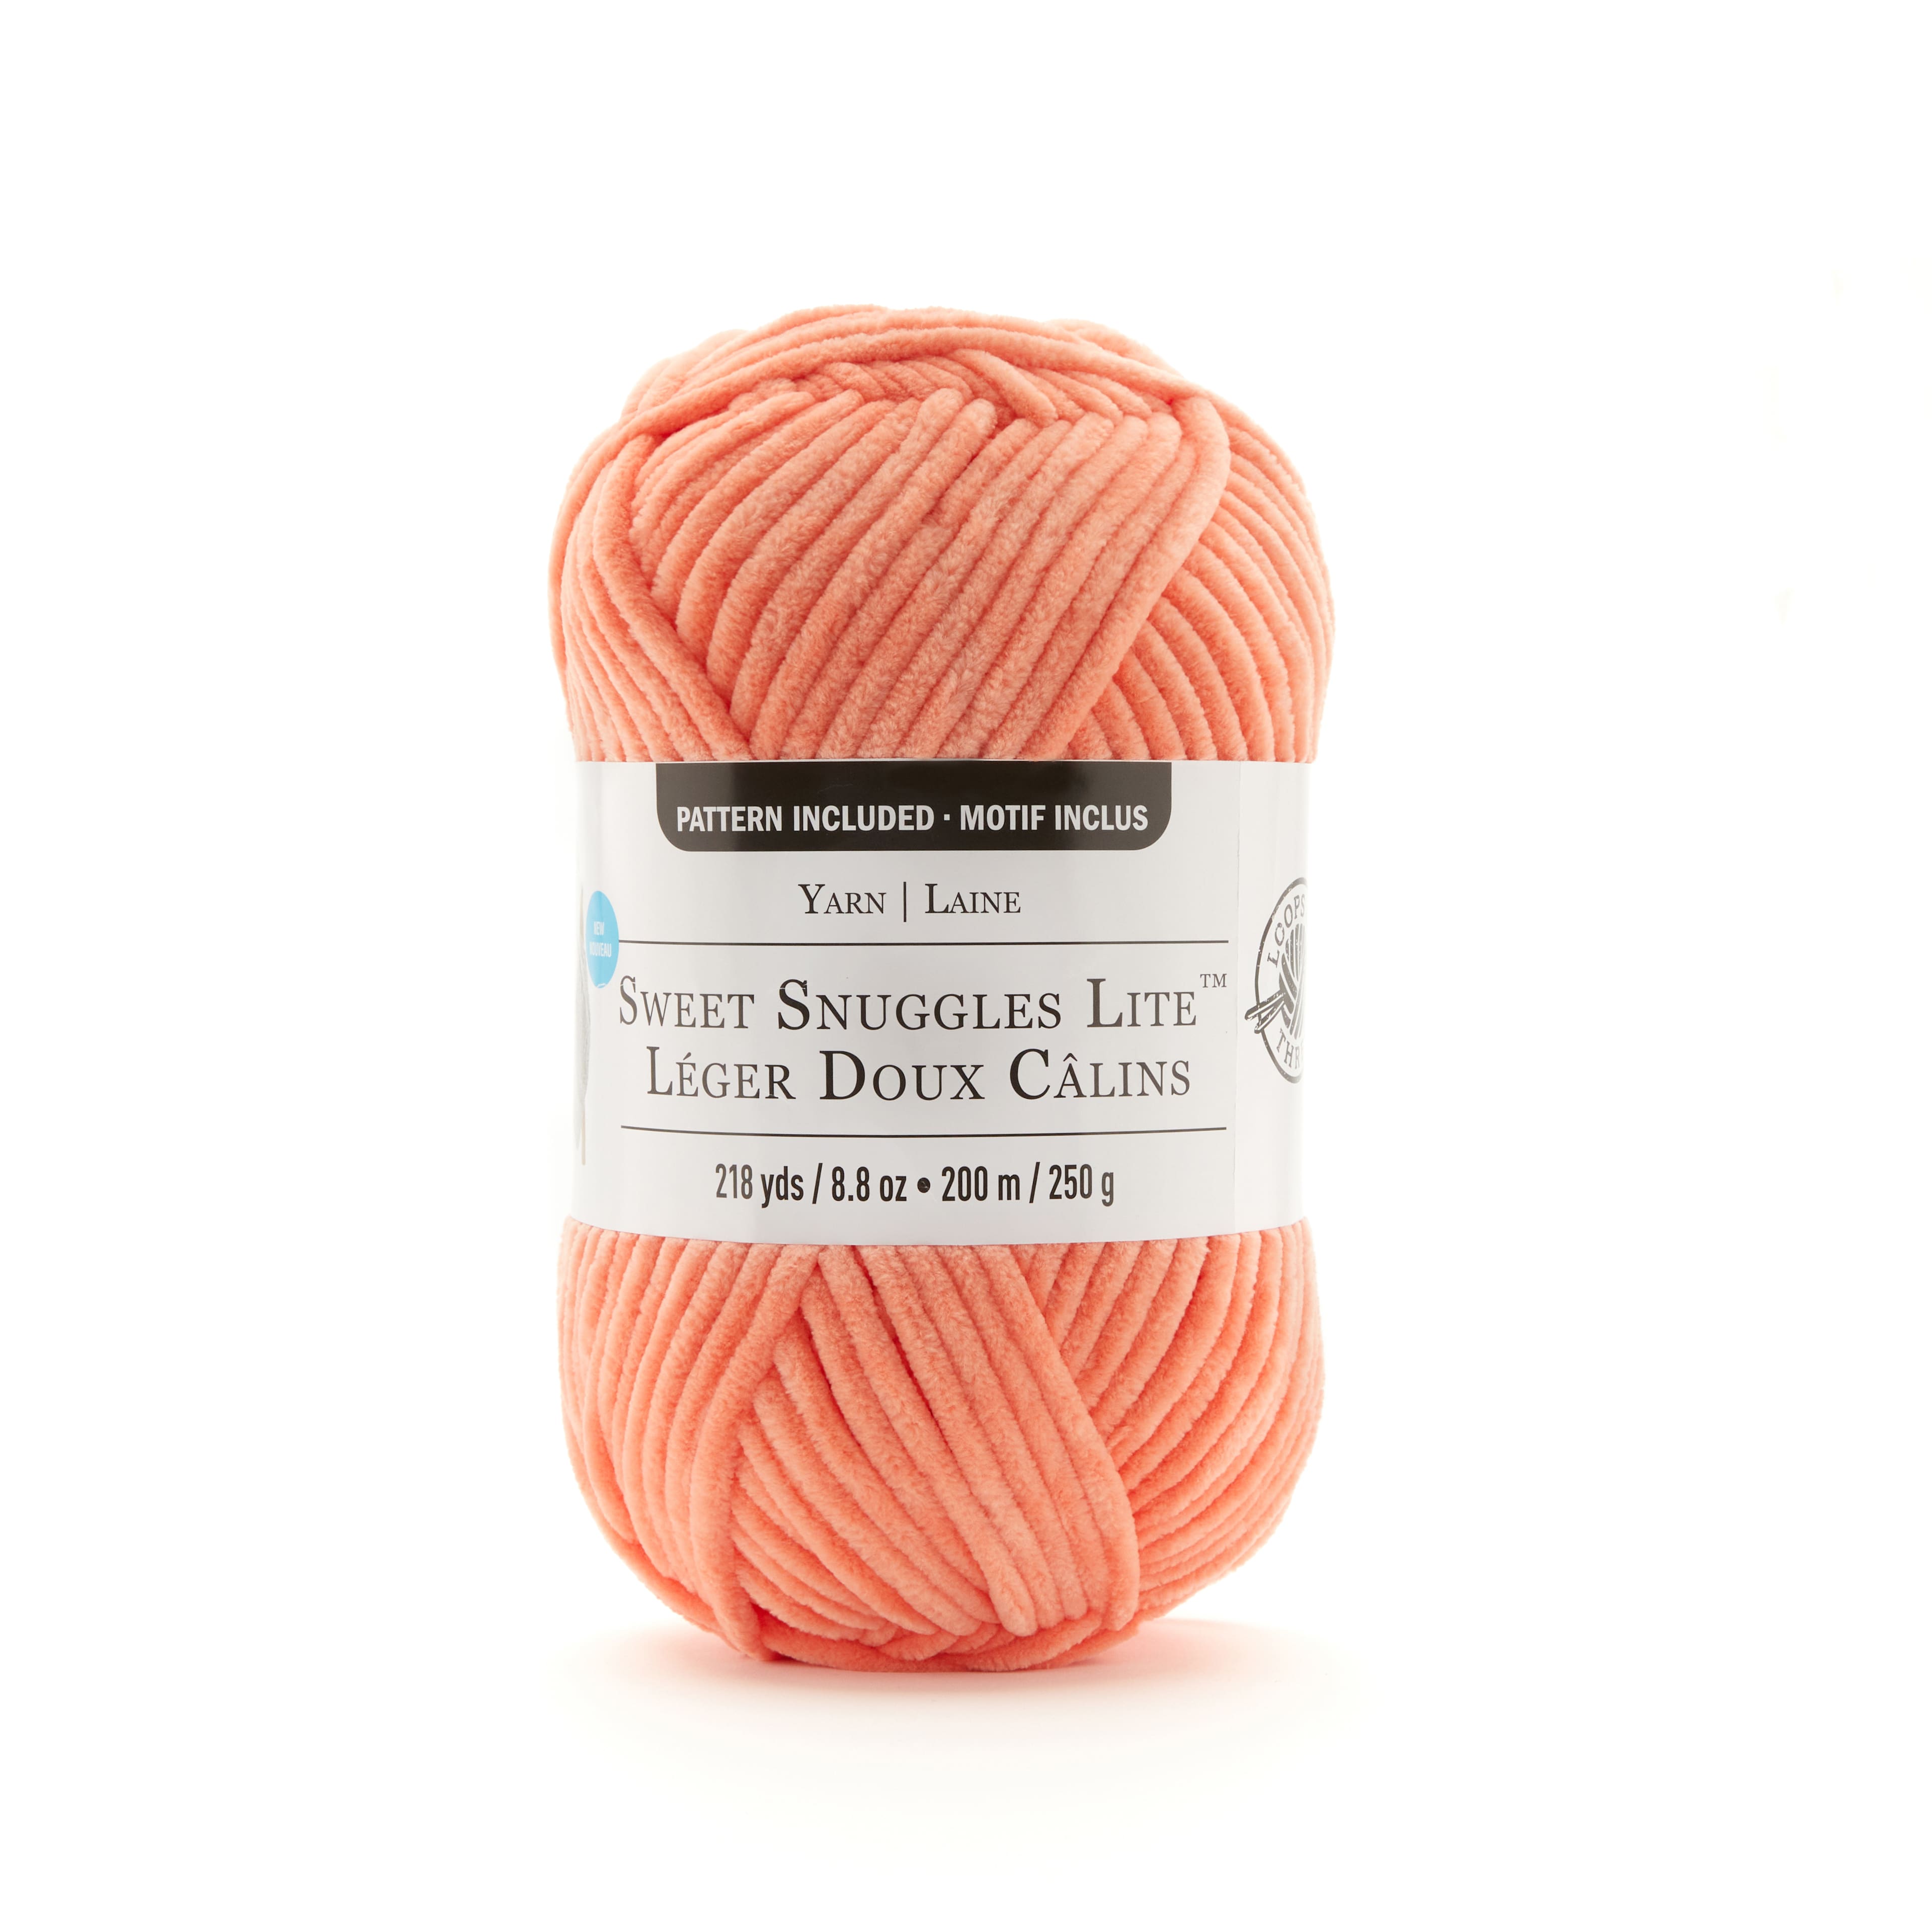 Sweet Snuggles Lite Yarn Crochet Animals - The Burgundy Basket